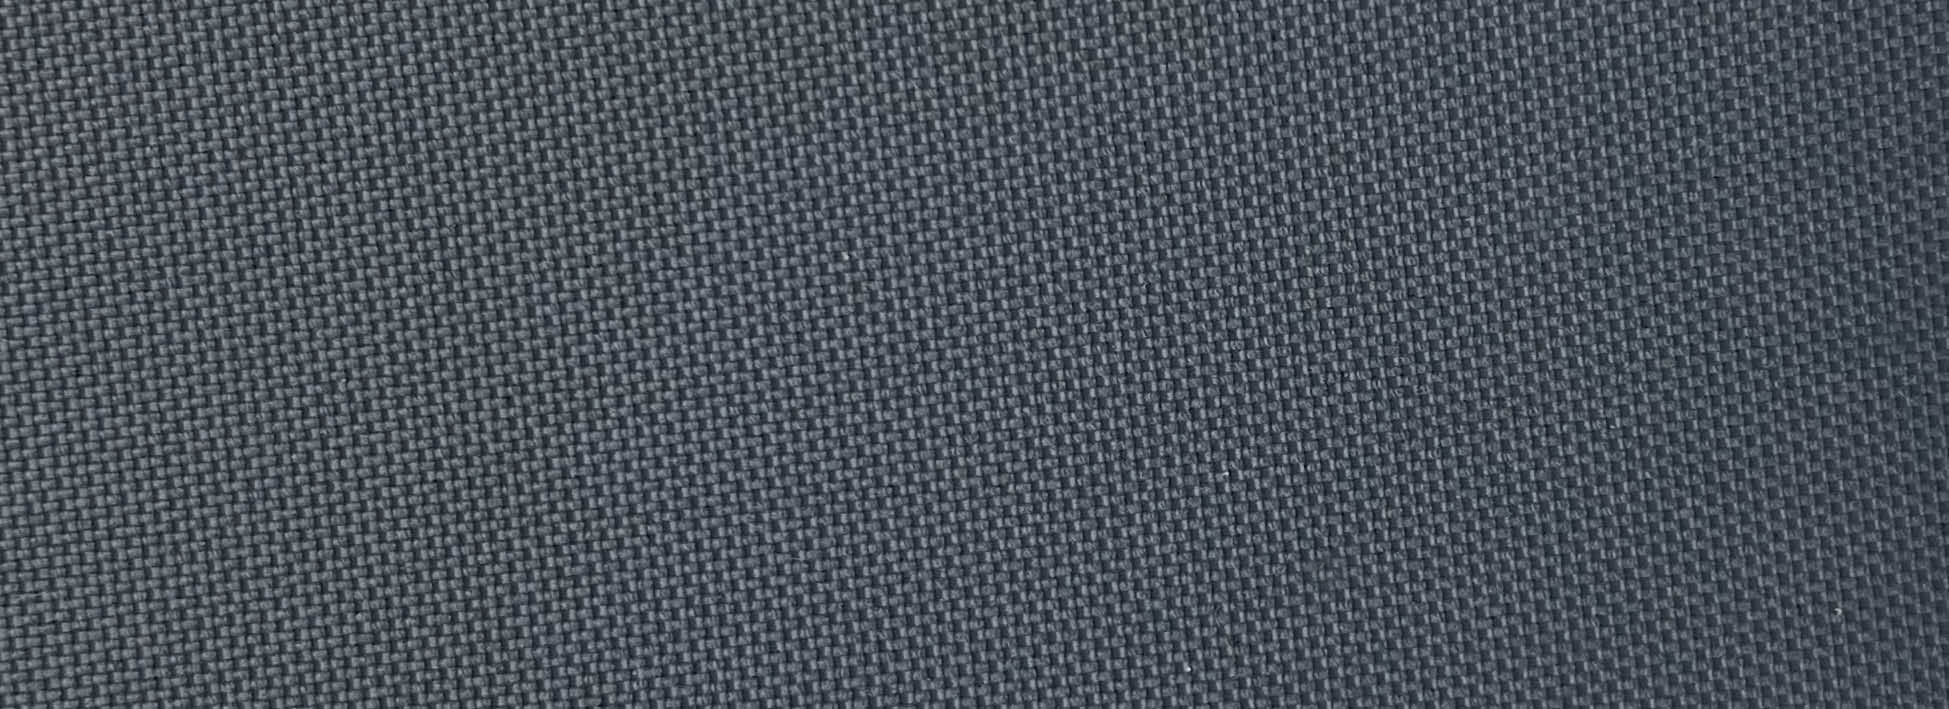 Military Grey Fabric Impression